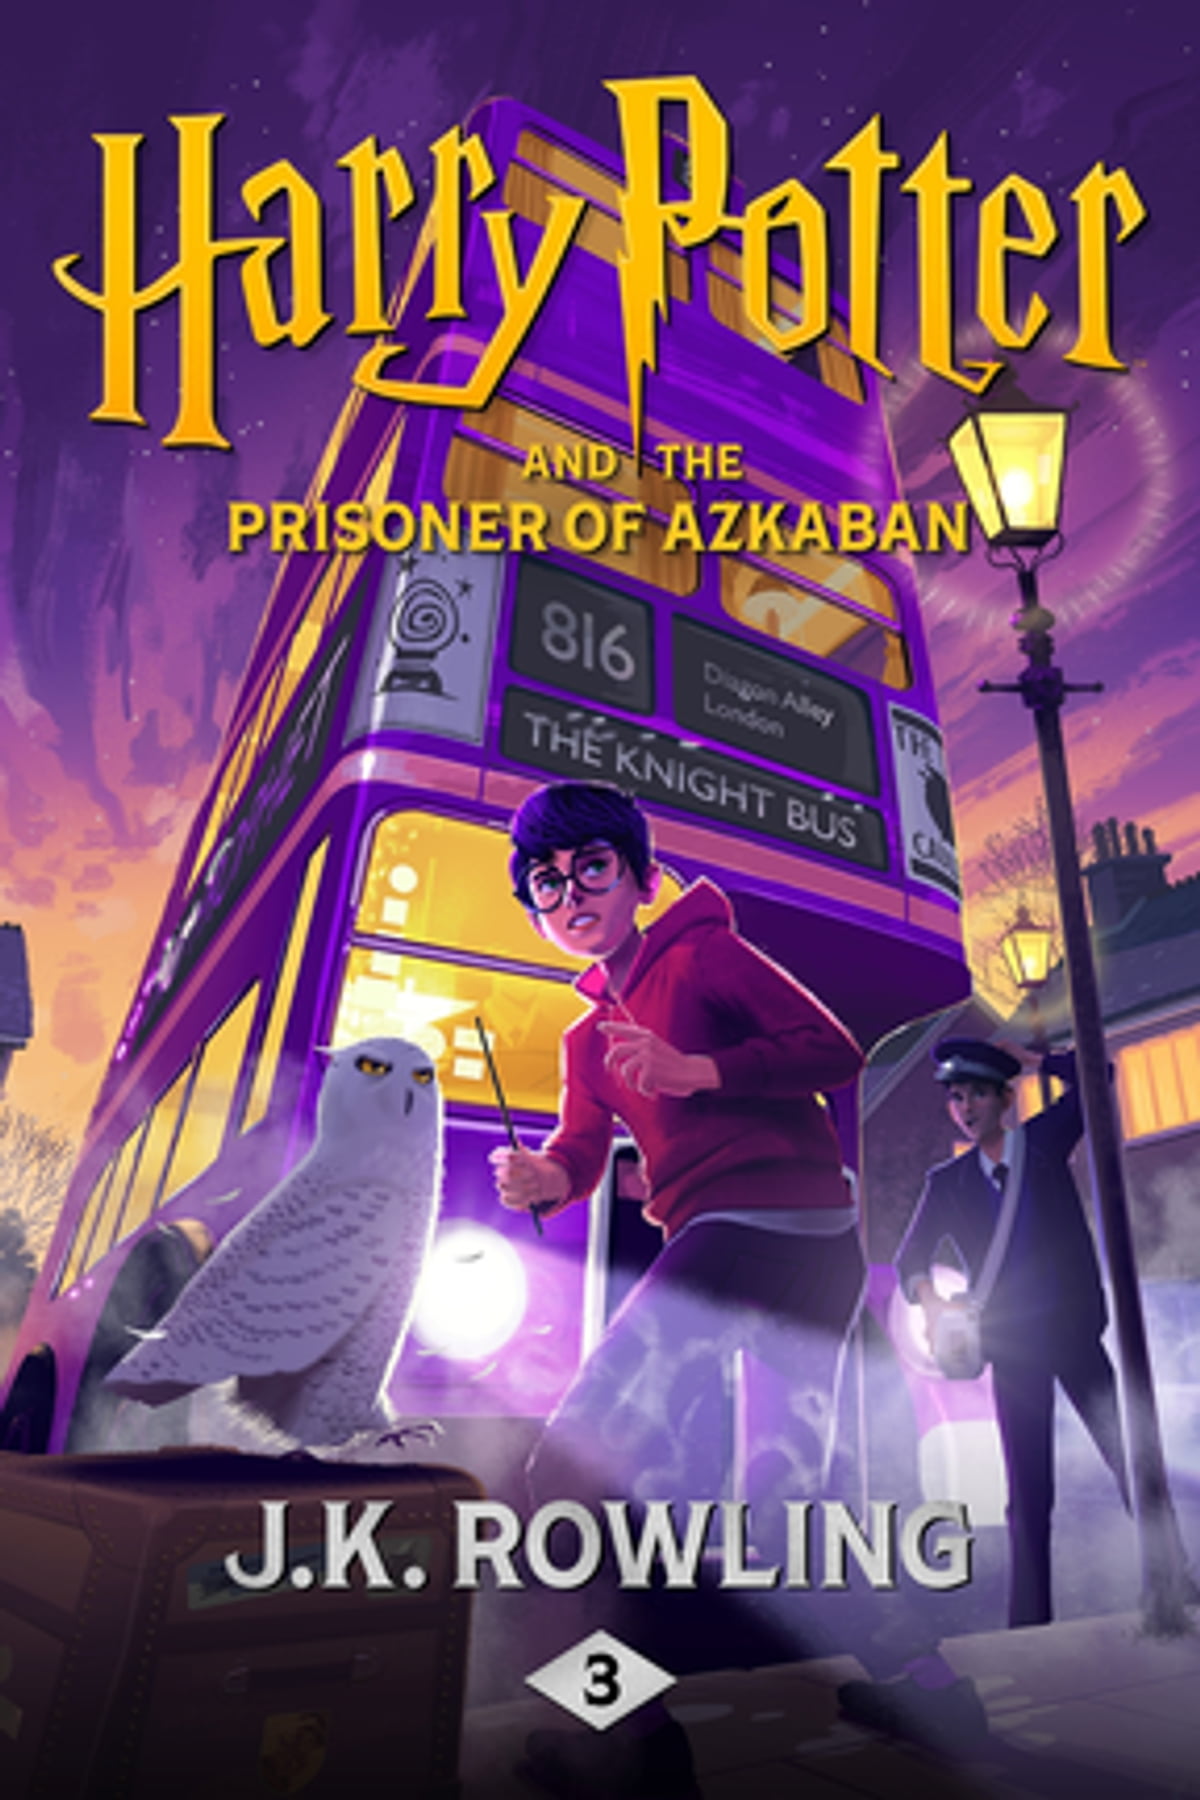 Harry Potter and the Prisoner of Azkaban Part 3 Story & Reviews